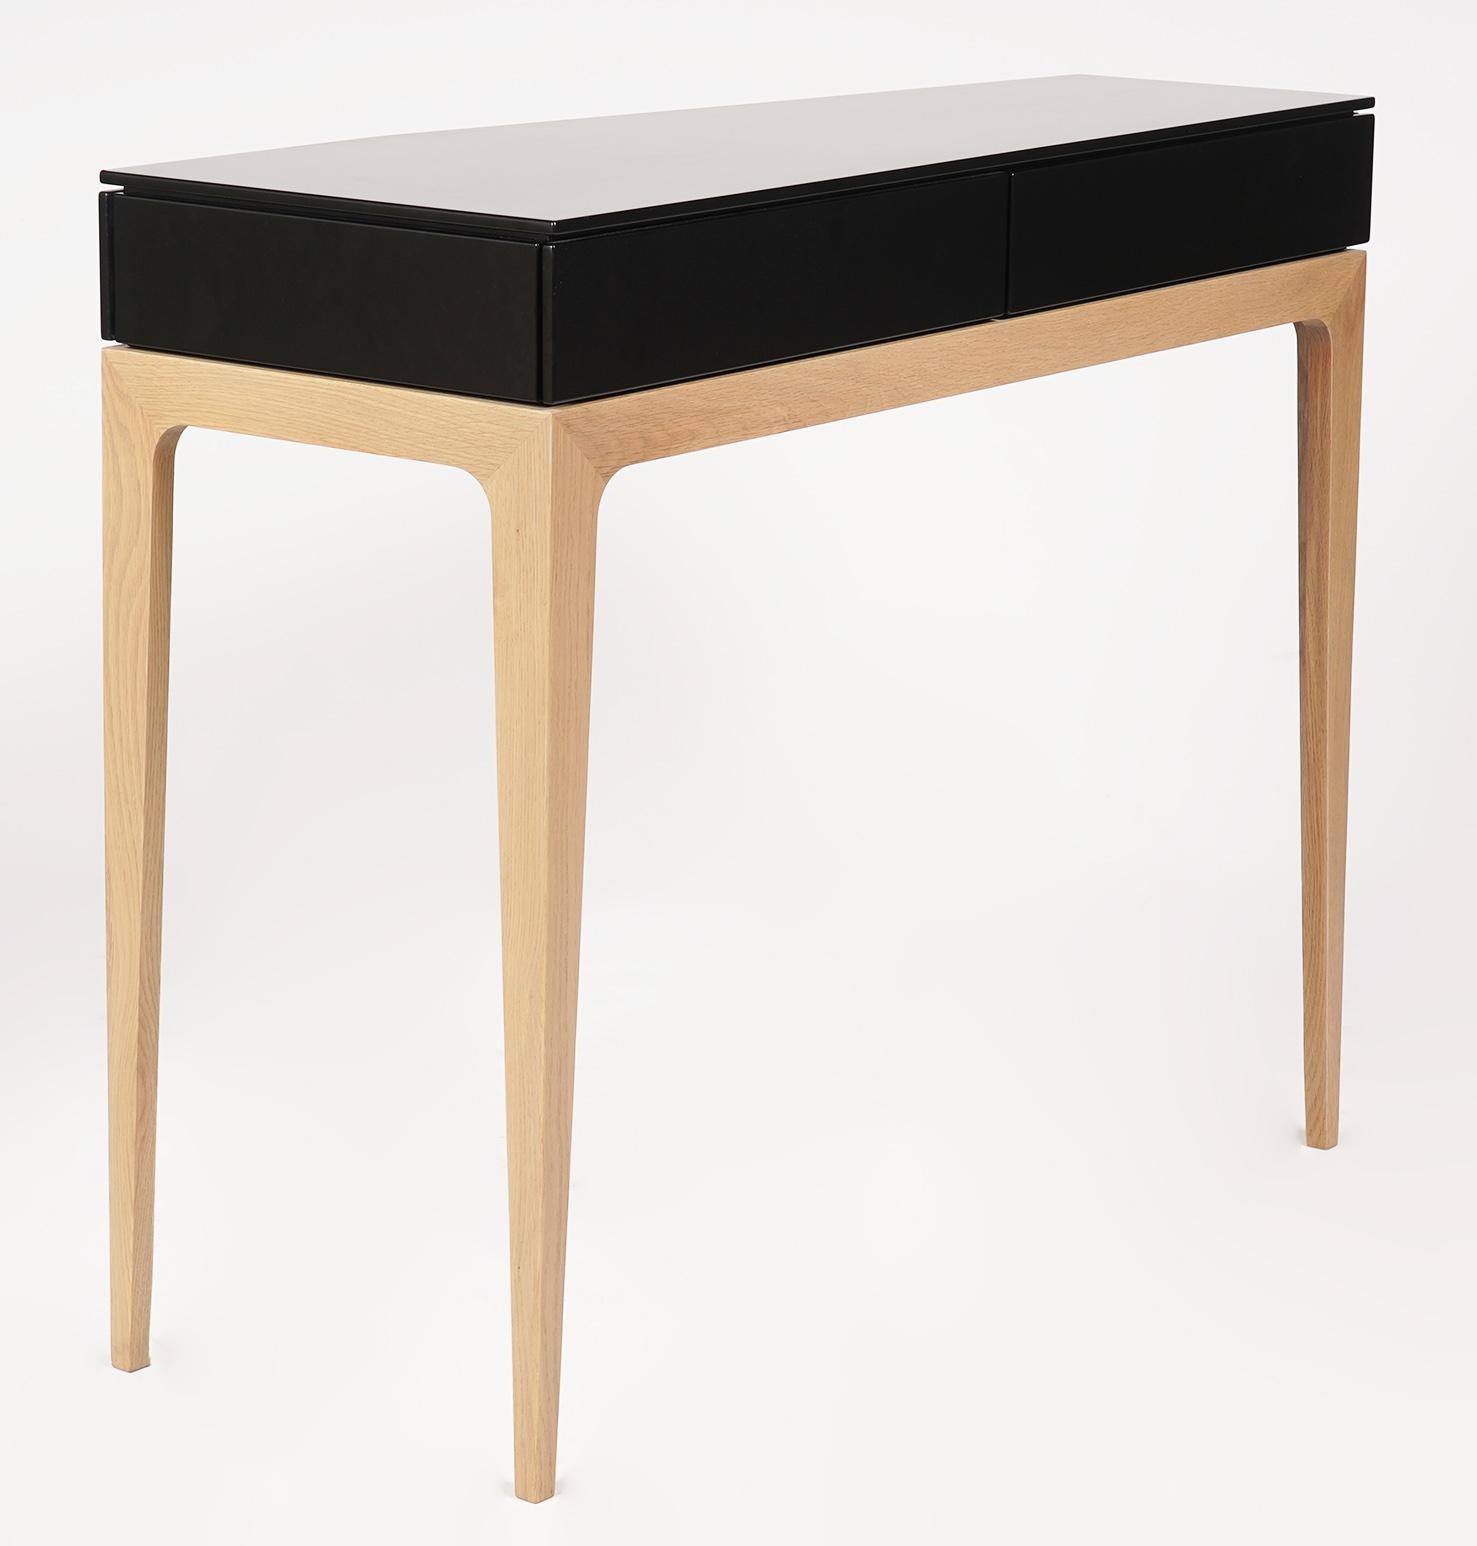 Contemporary Sandra Demuth for Roche Bobois 'Moved' Console Table 3 Legs